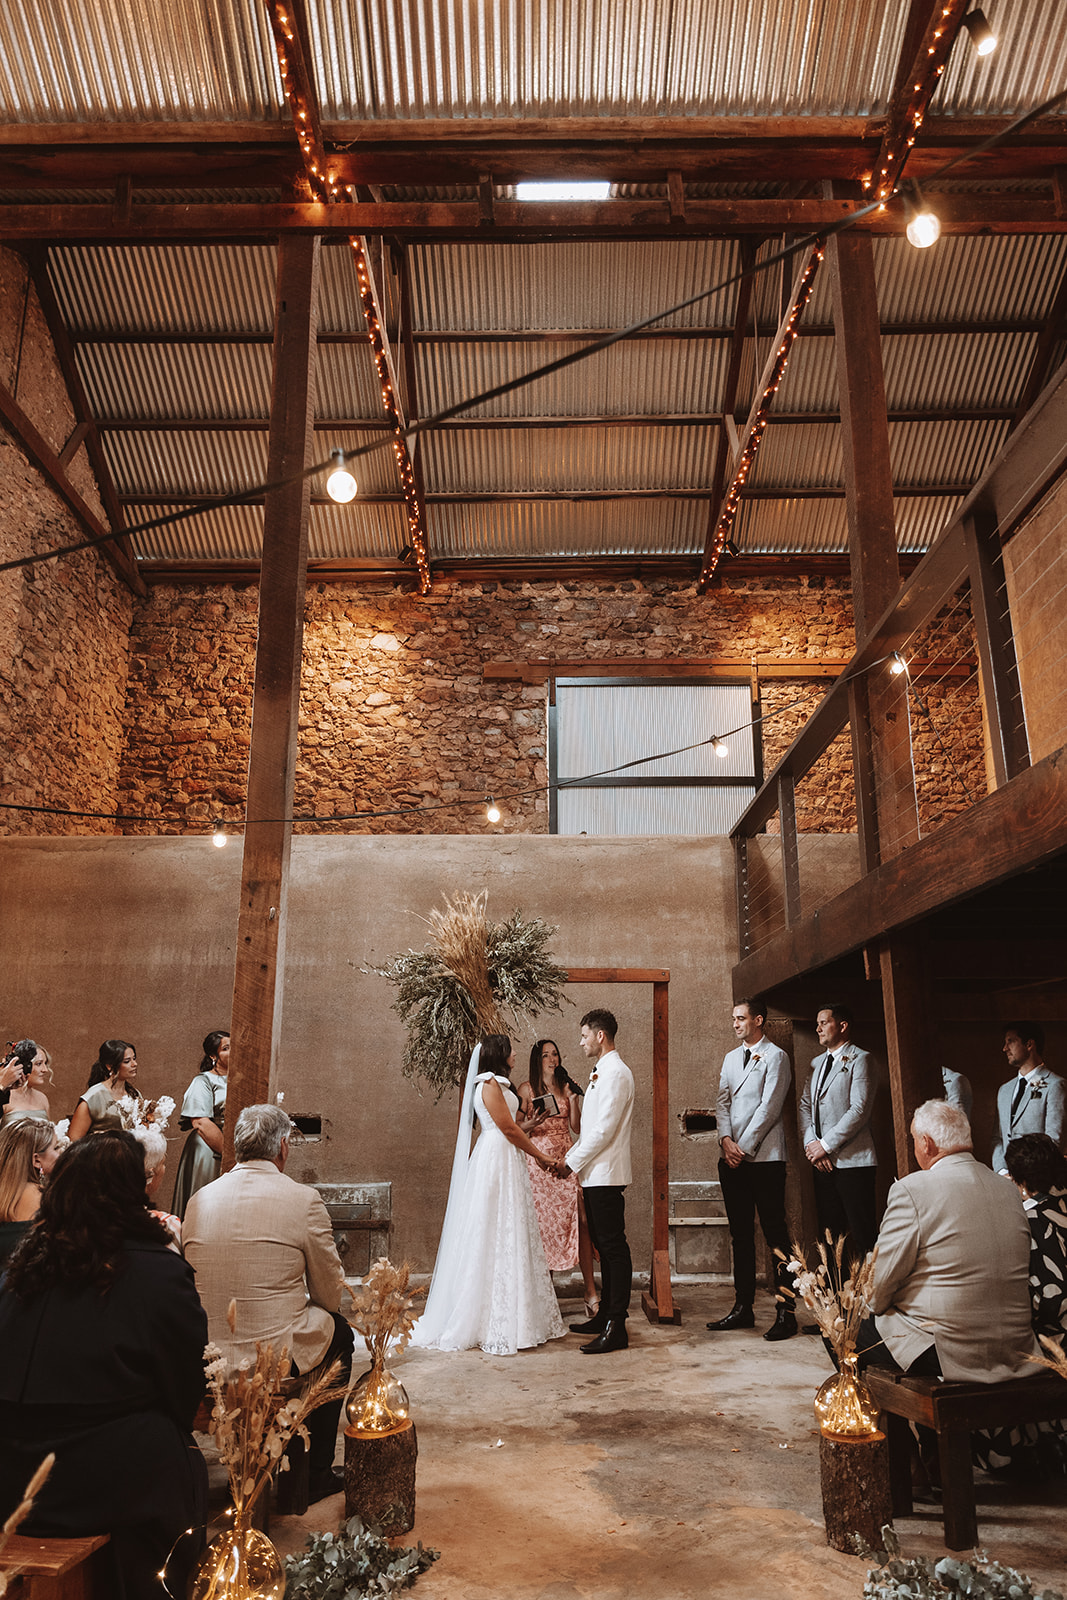 Koonowla Wines, historic winery wedding venue in SA's Clare Valley